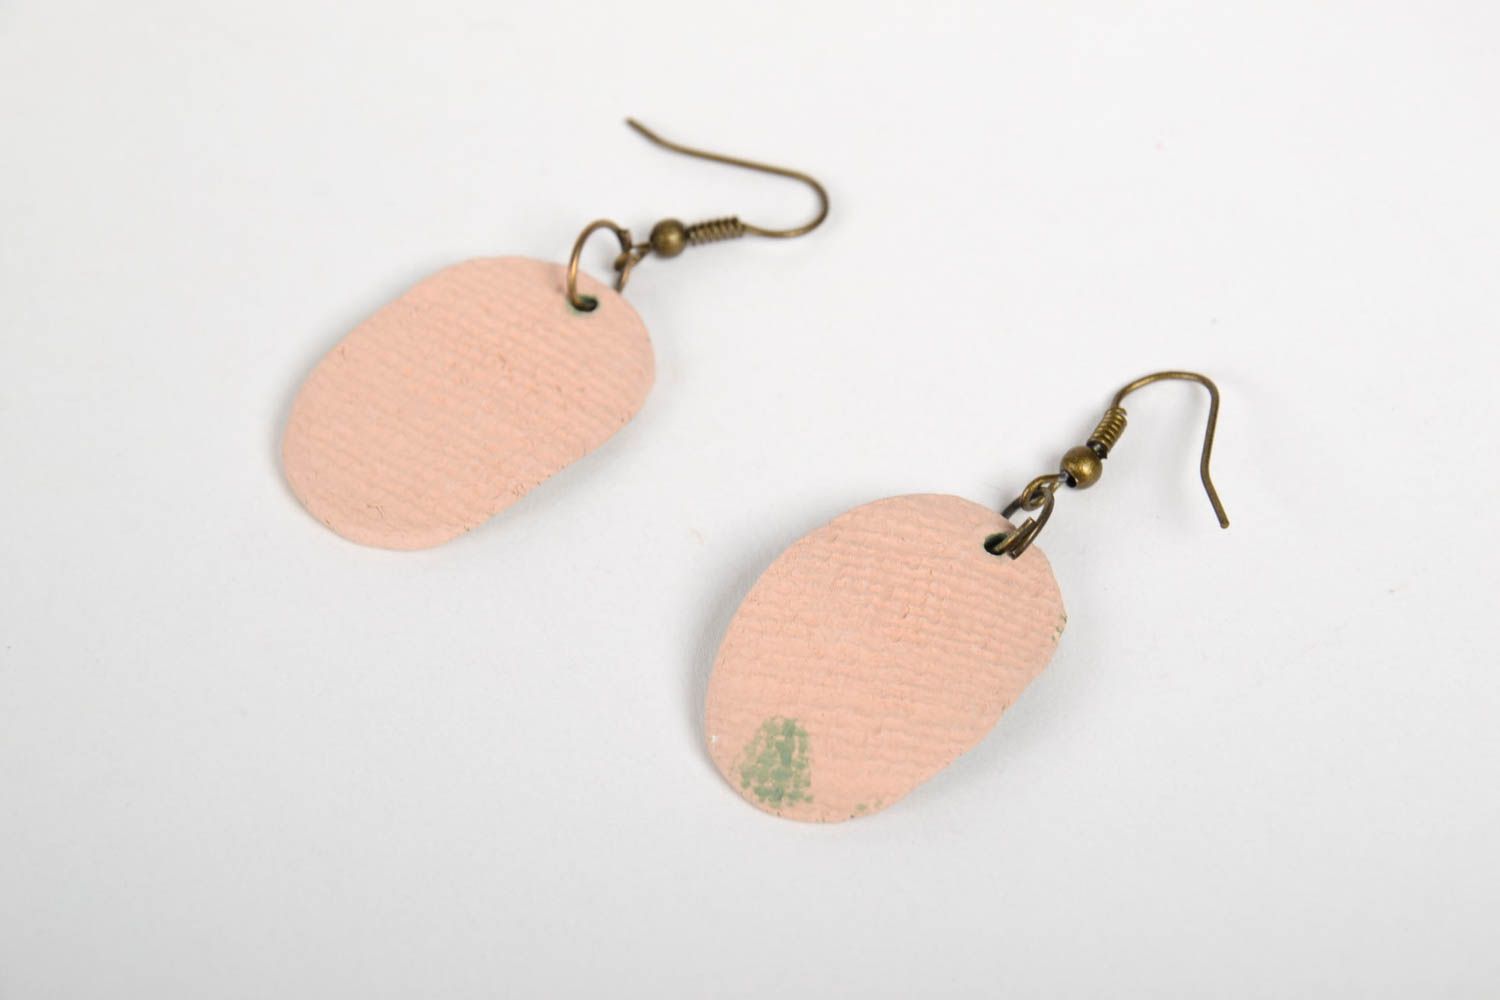 Unusual handmade accessories ceramic leaves earrings design jewelry gift for gir photo 3